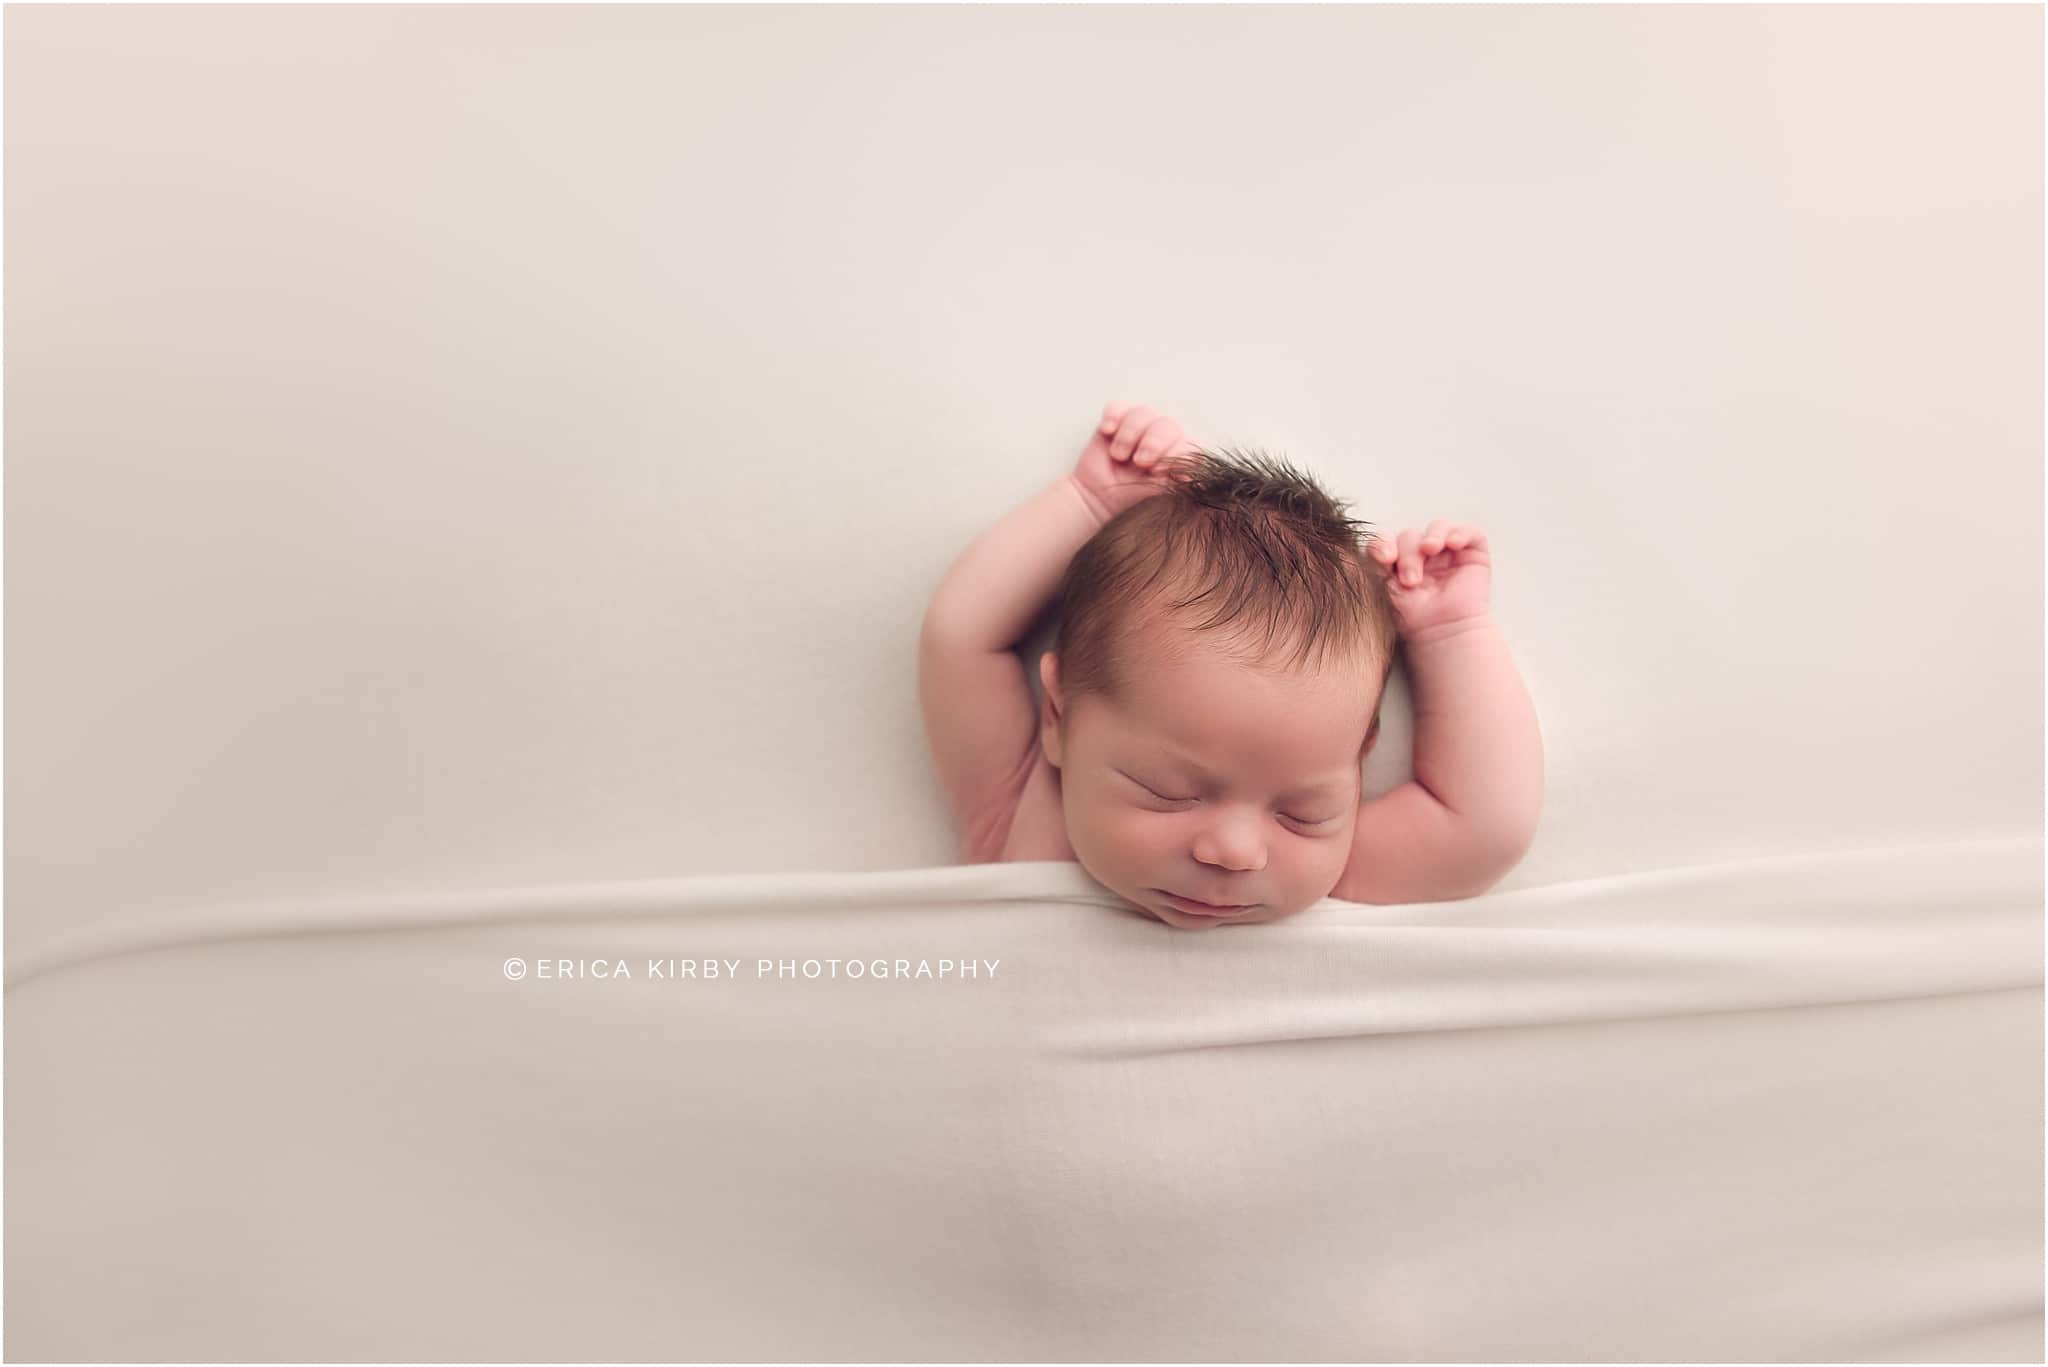 Newborn Photography NWA | Baby boy newborn photography session in Bentonville Arkansas | baby on cream background unposed